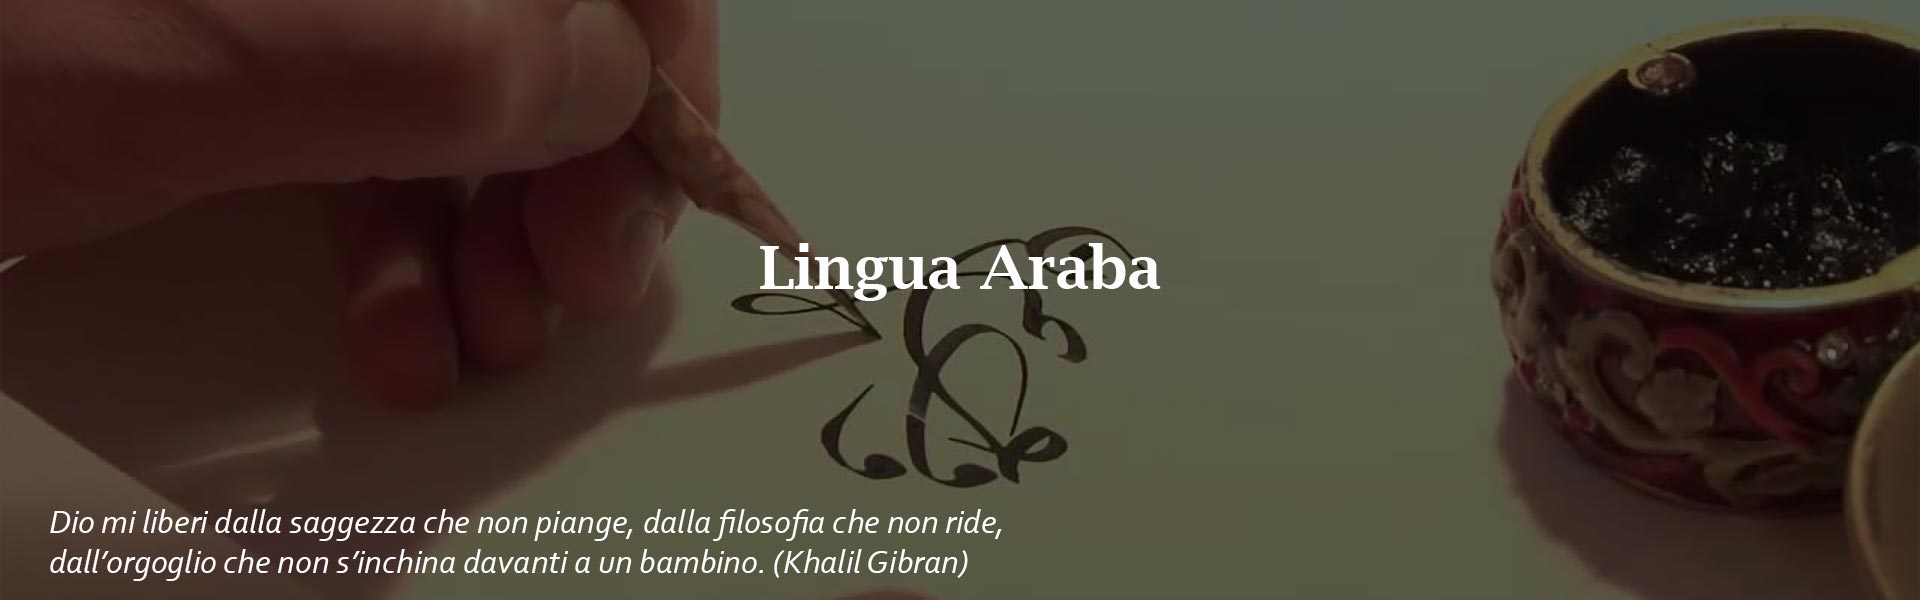 lingua-araba-Alif